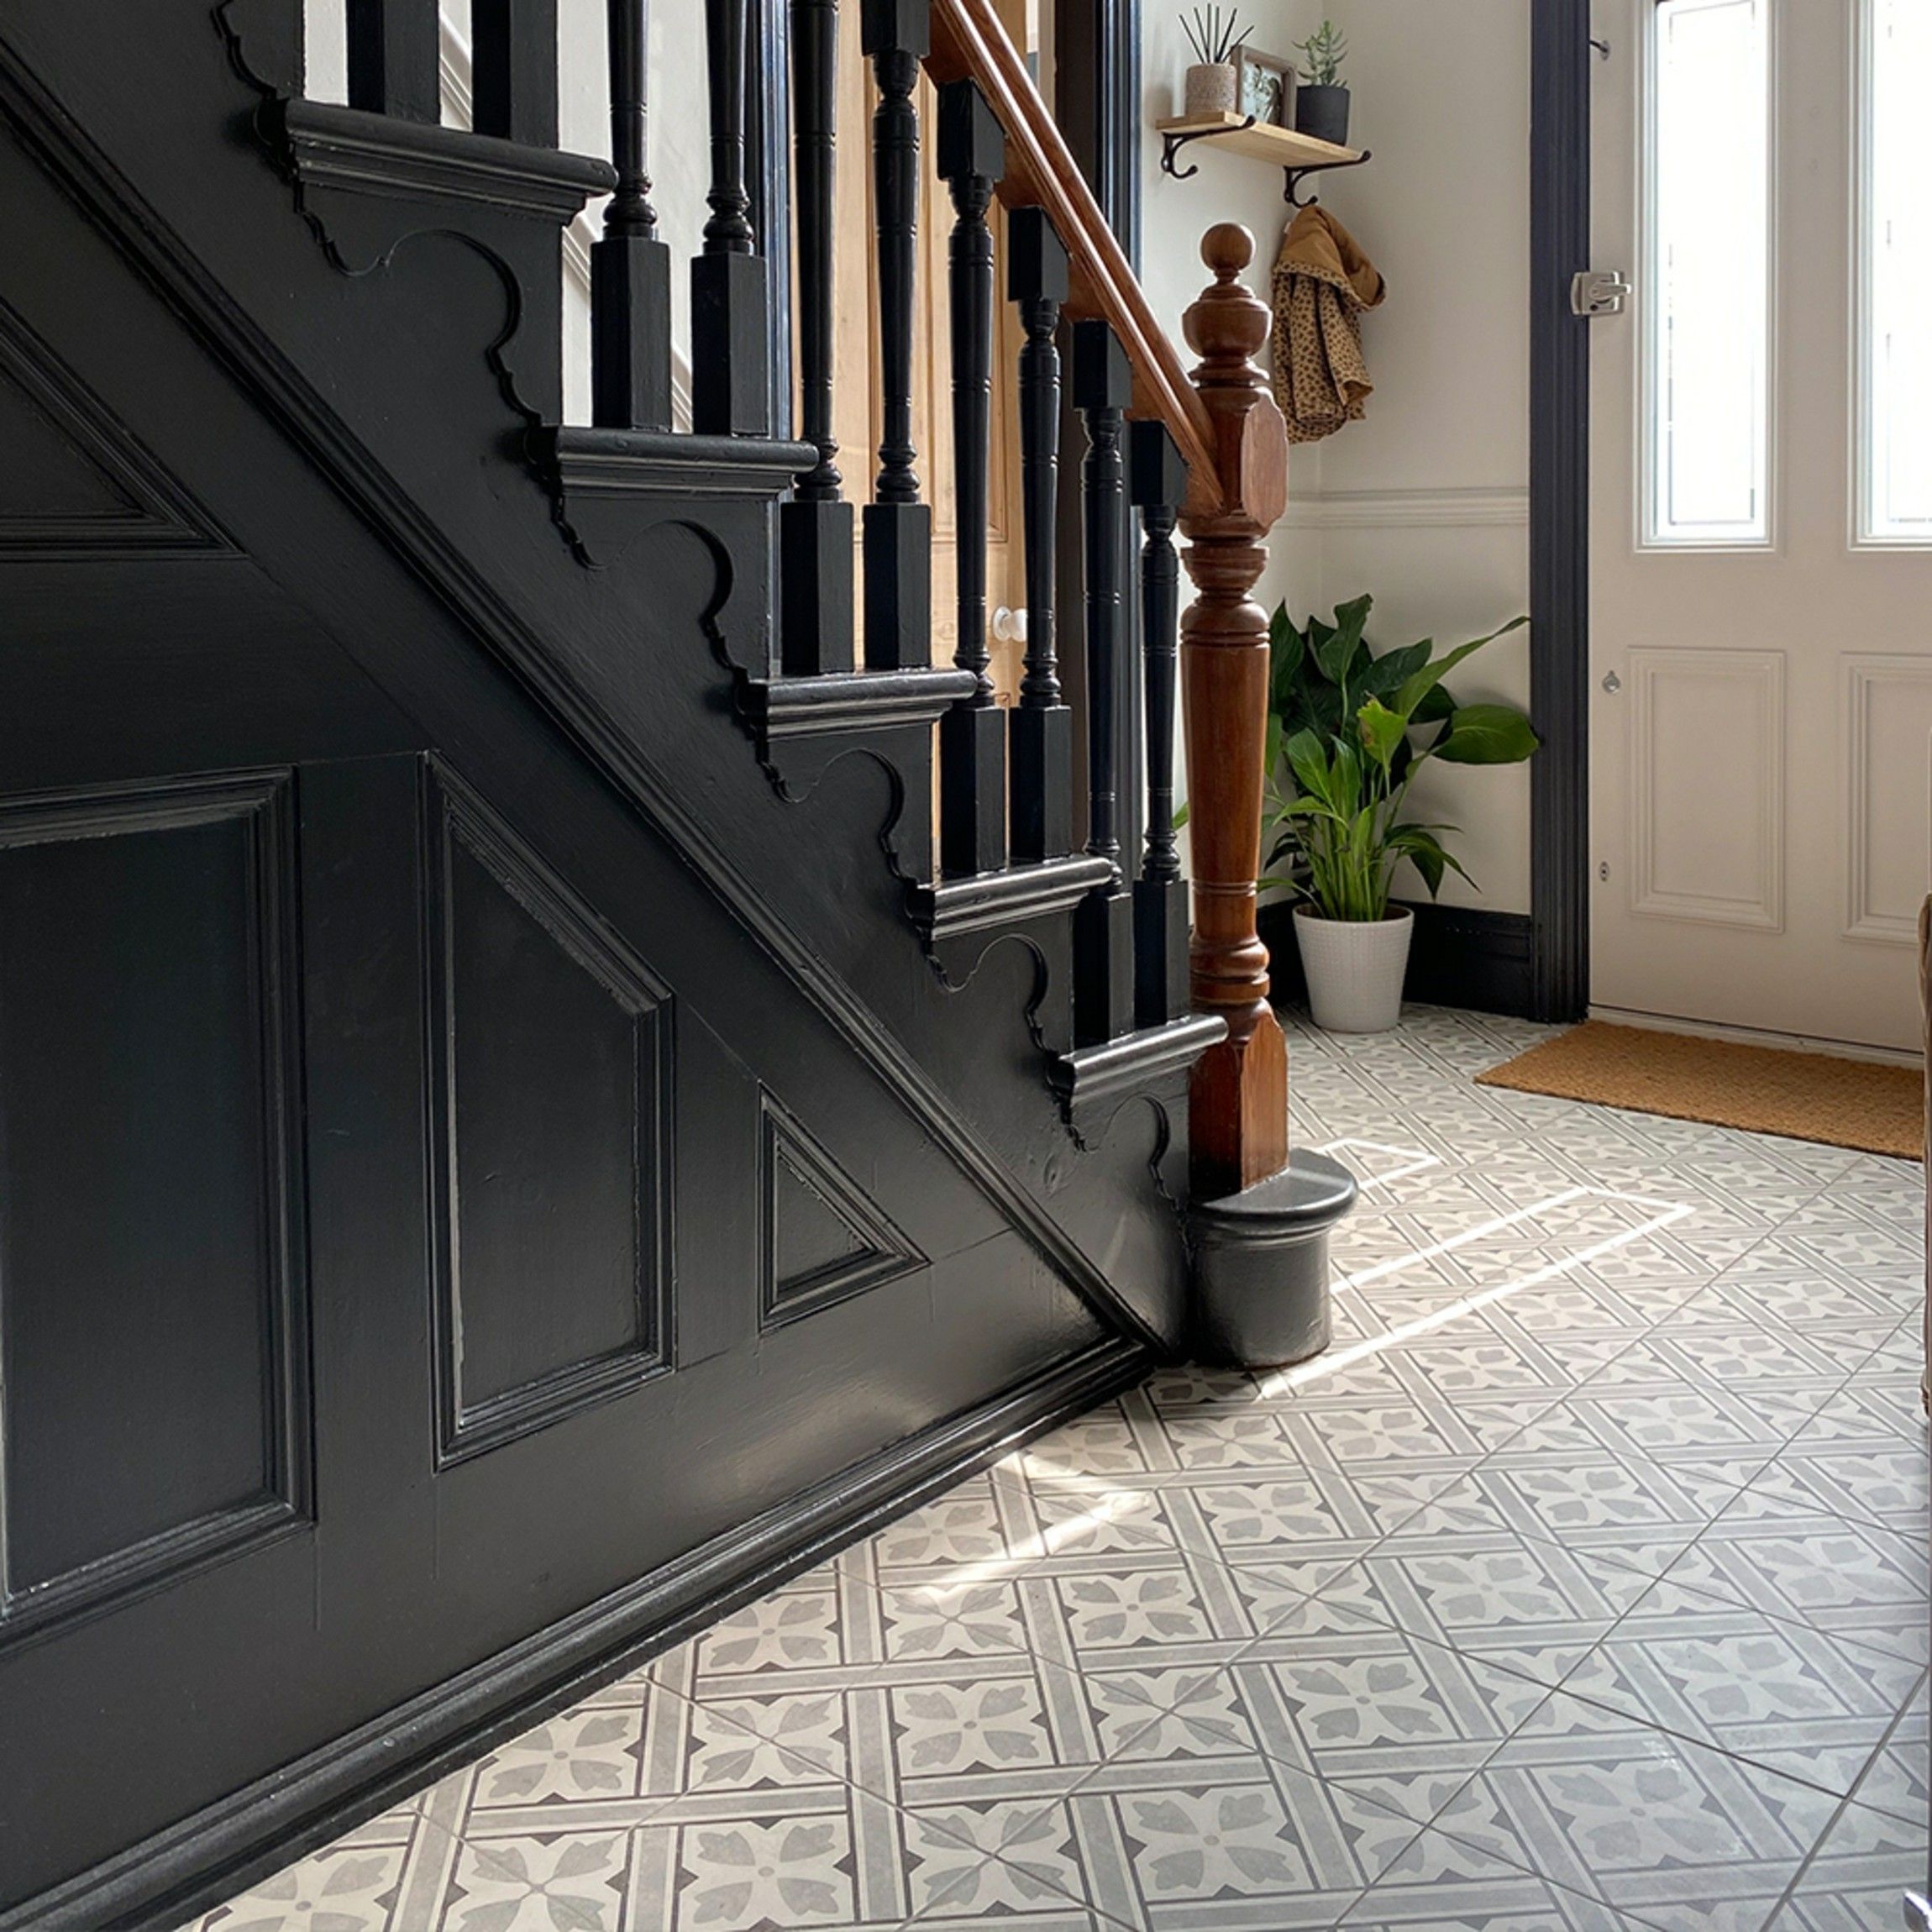 CUT TILE SAMPLES Ashley Mr Jones Charcoal Grey Porcelain Wall & Floor Tiles L 